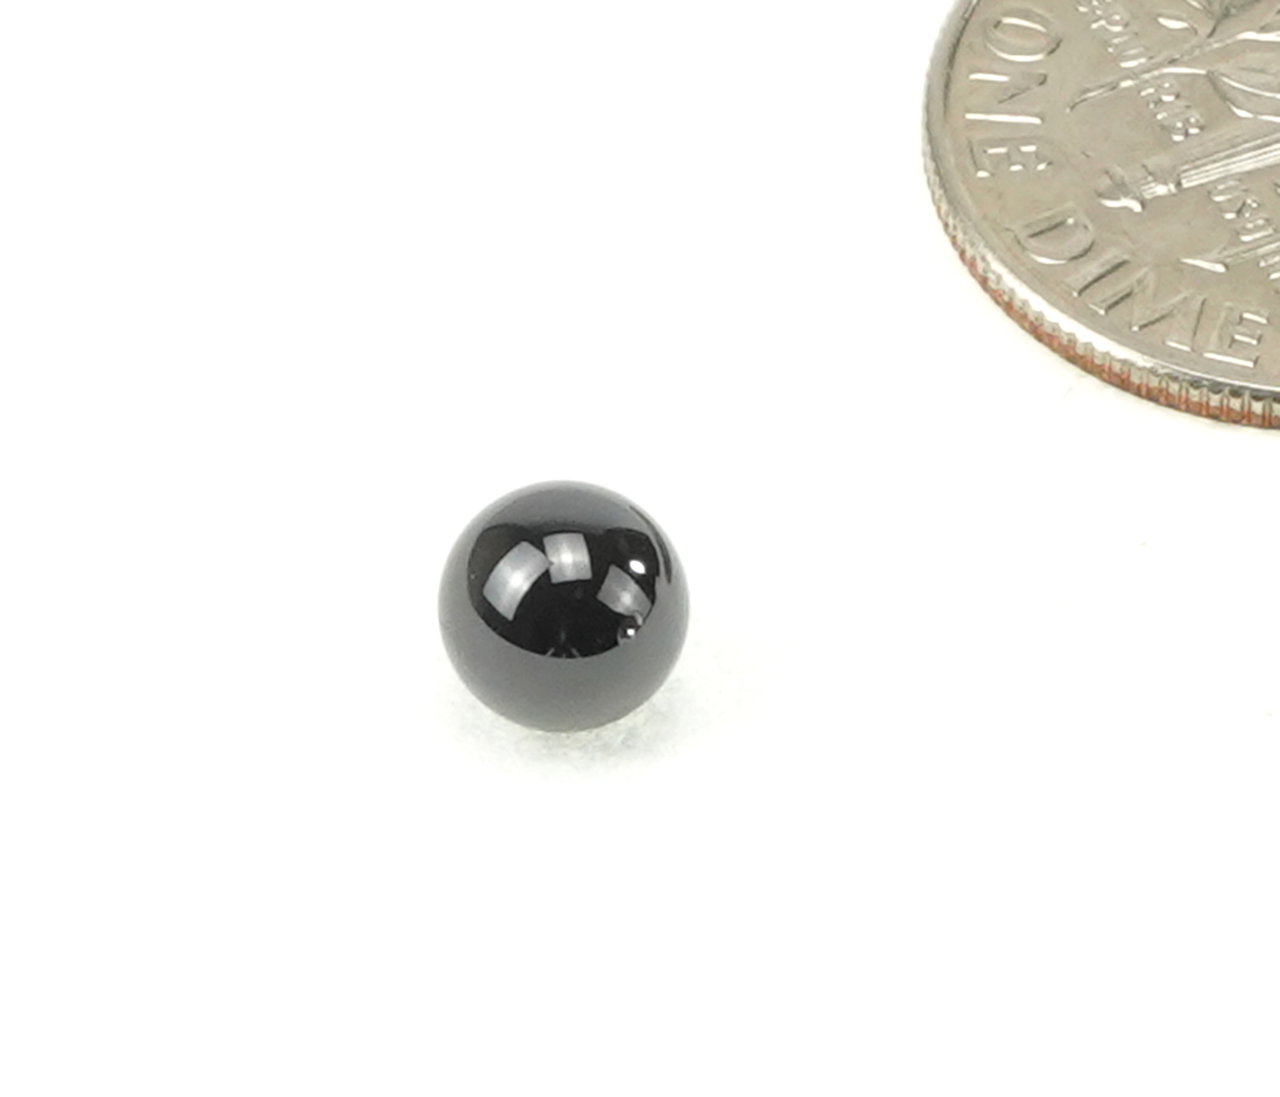 Enduro BKC-0031 - 5/32 (0.15625) Grade 5 Si3N4 Ceramic Balls (50 pieces)